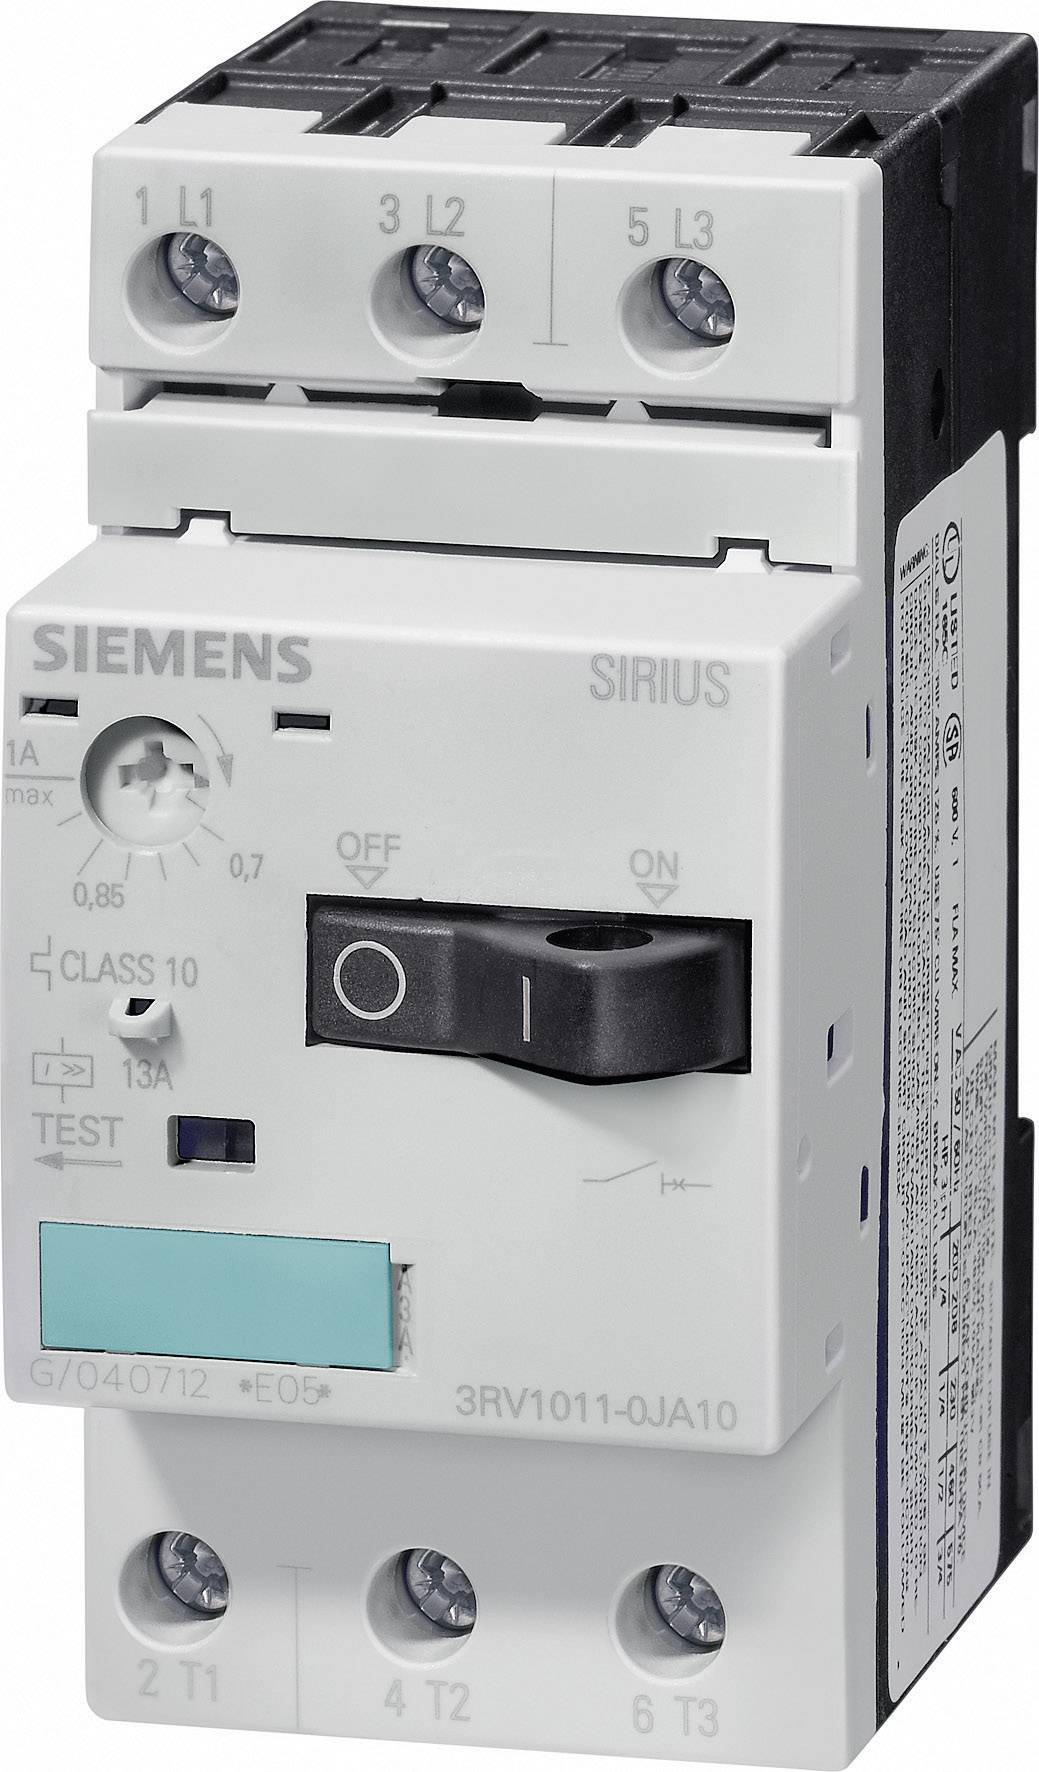 SIEMENS FURNAS ELECTRIC CO 3RV1011-0GA10 CIRCUIT BREAKER